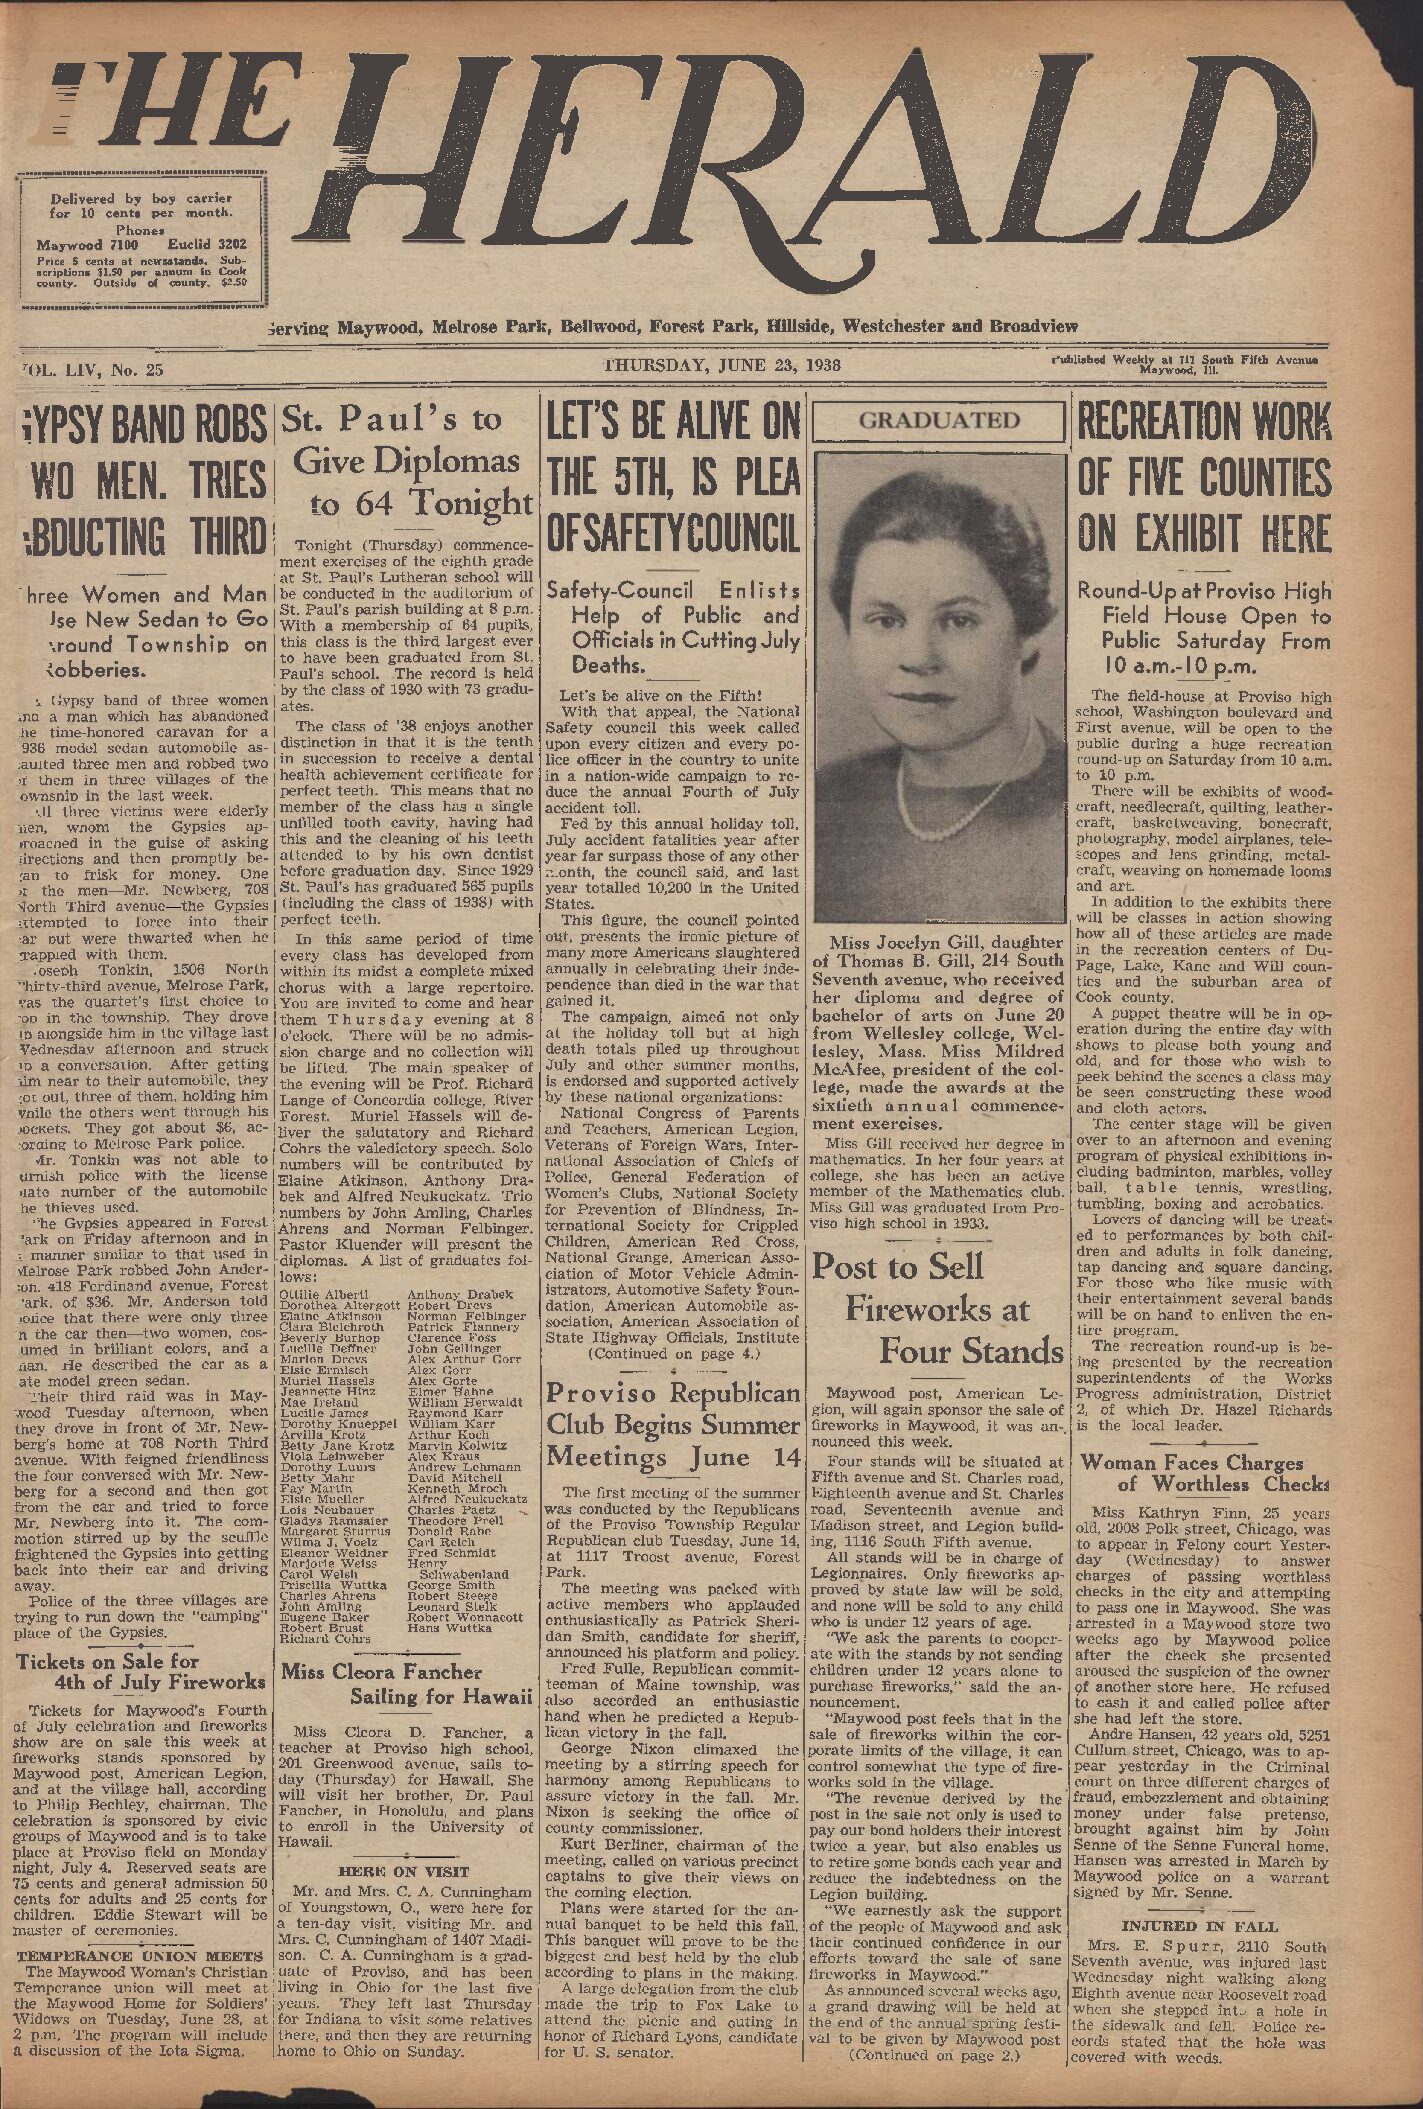 The Herald – 19380623